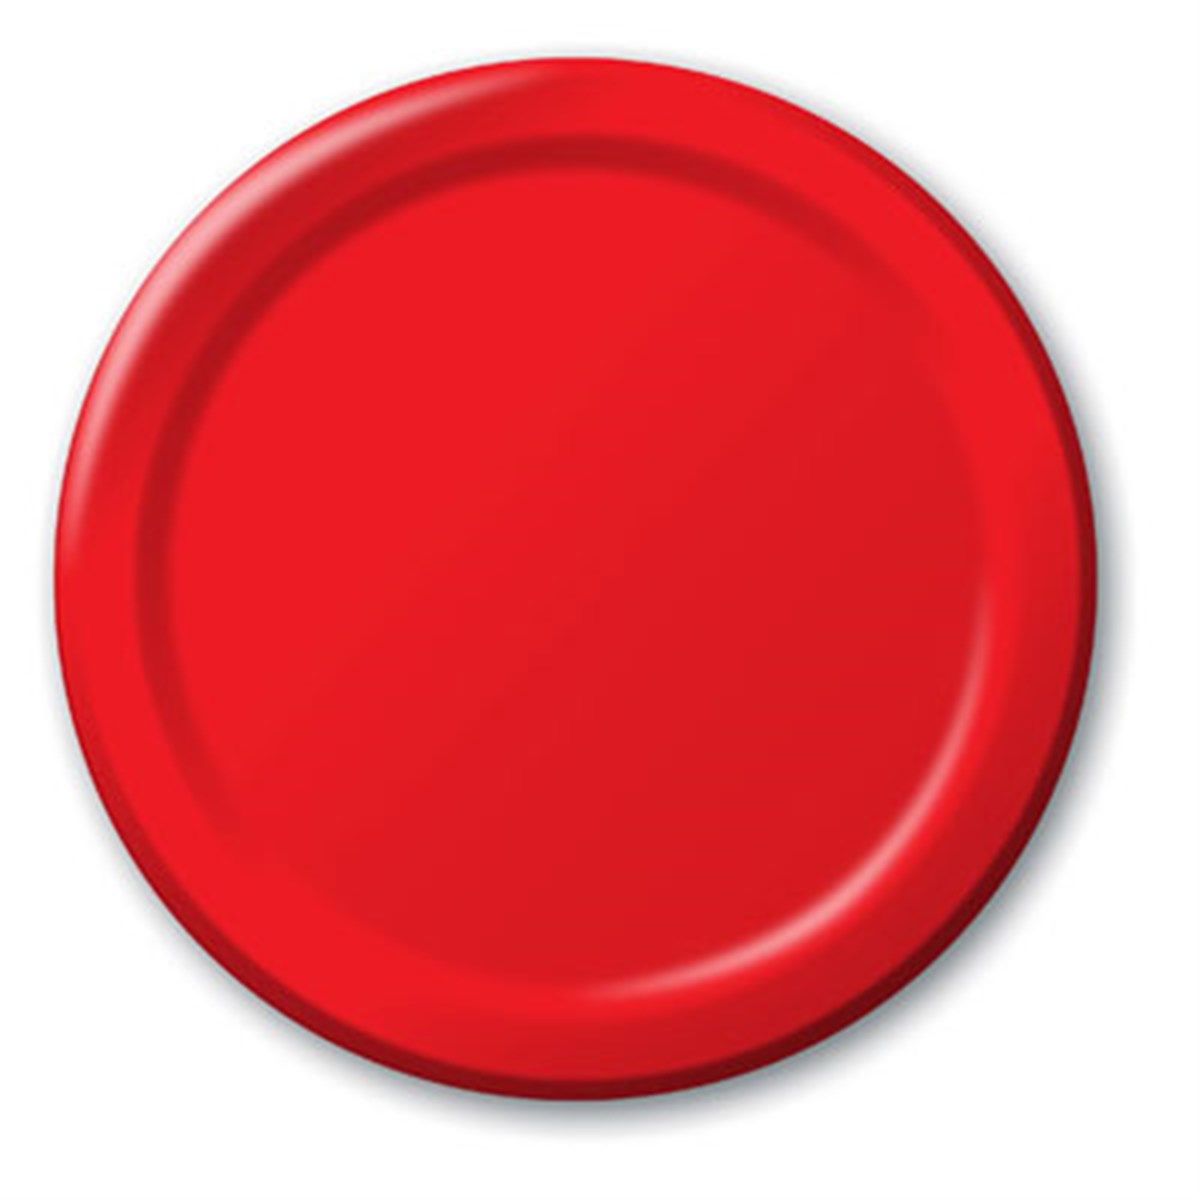 Тарелки красного цвета. Красная тарелка. Красное блюдце. Красная тарелочка. Красная круглая тарелка.